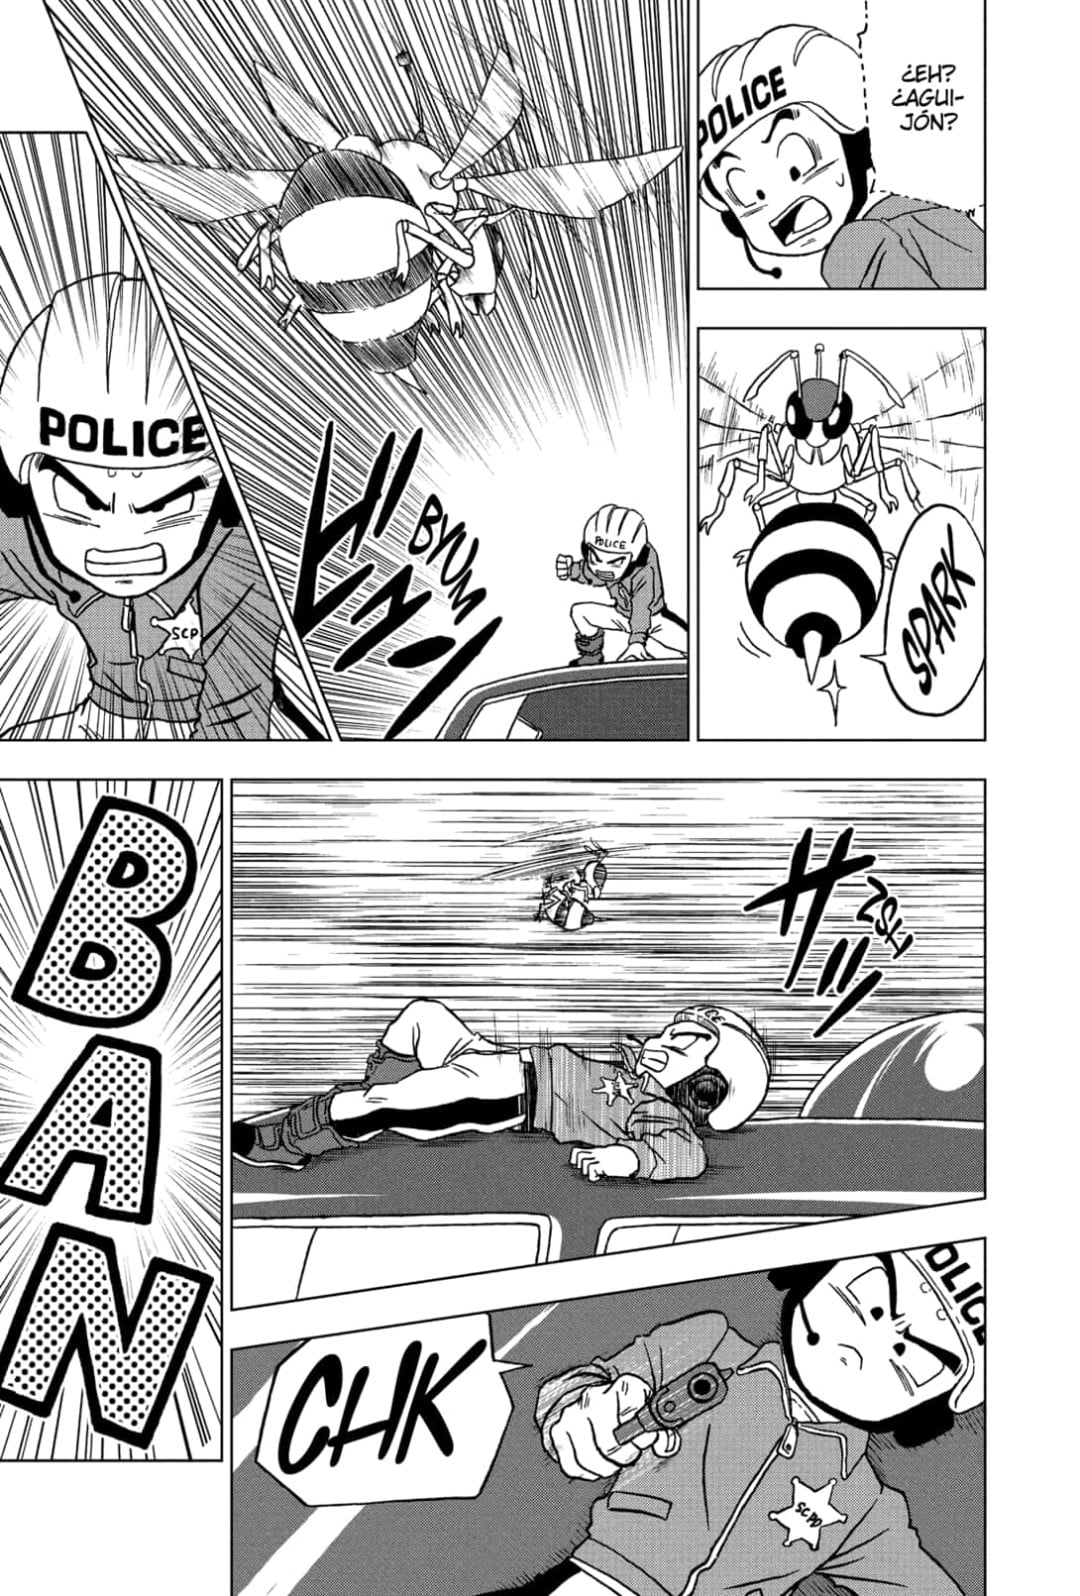 Dragon Ball Super: se filtran numerosas imágenes del capítulo 91 del manga